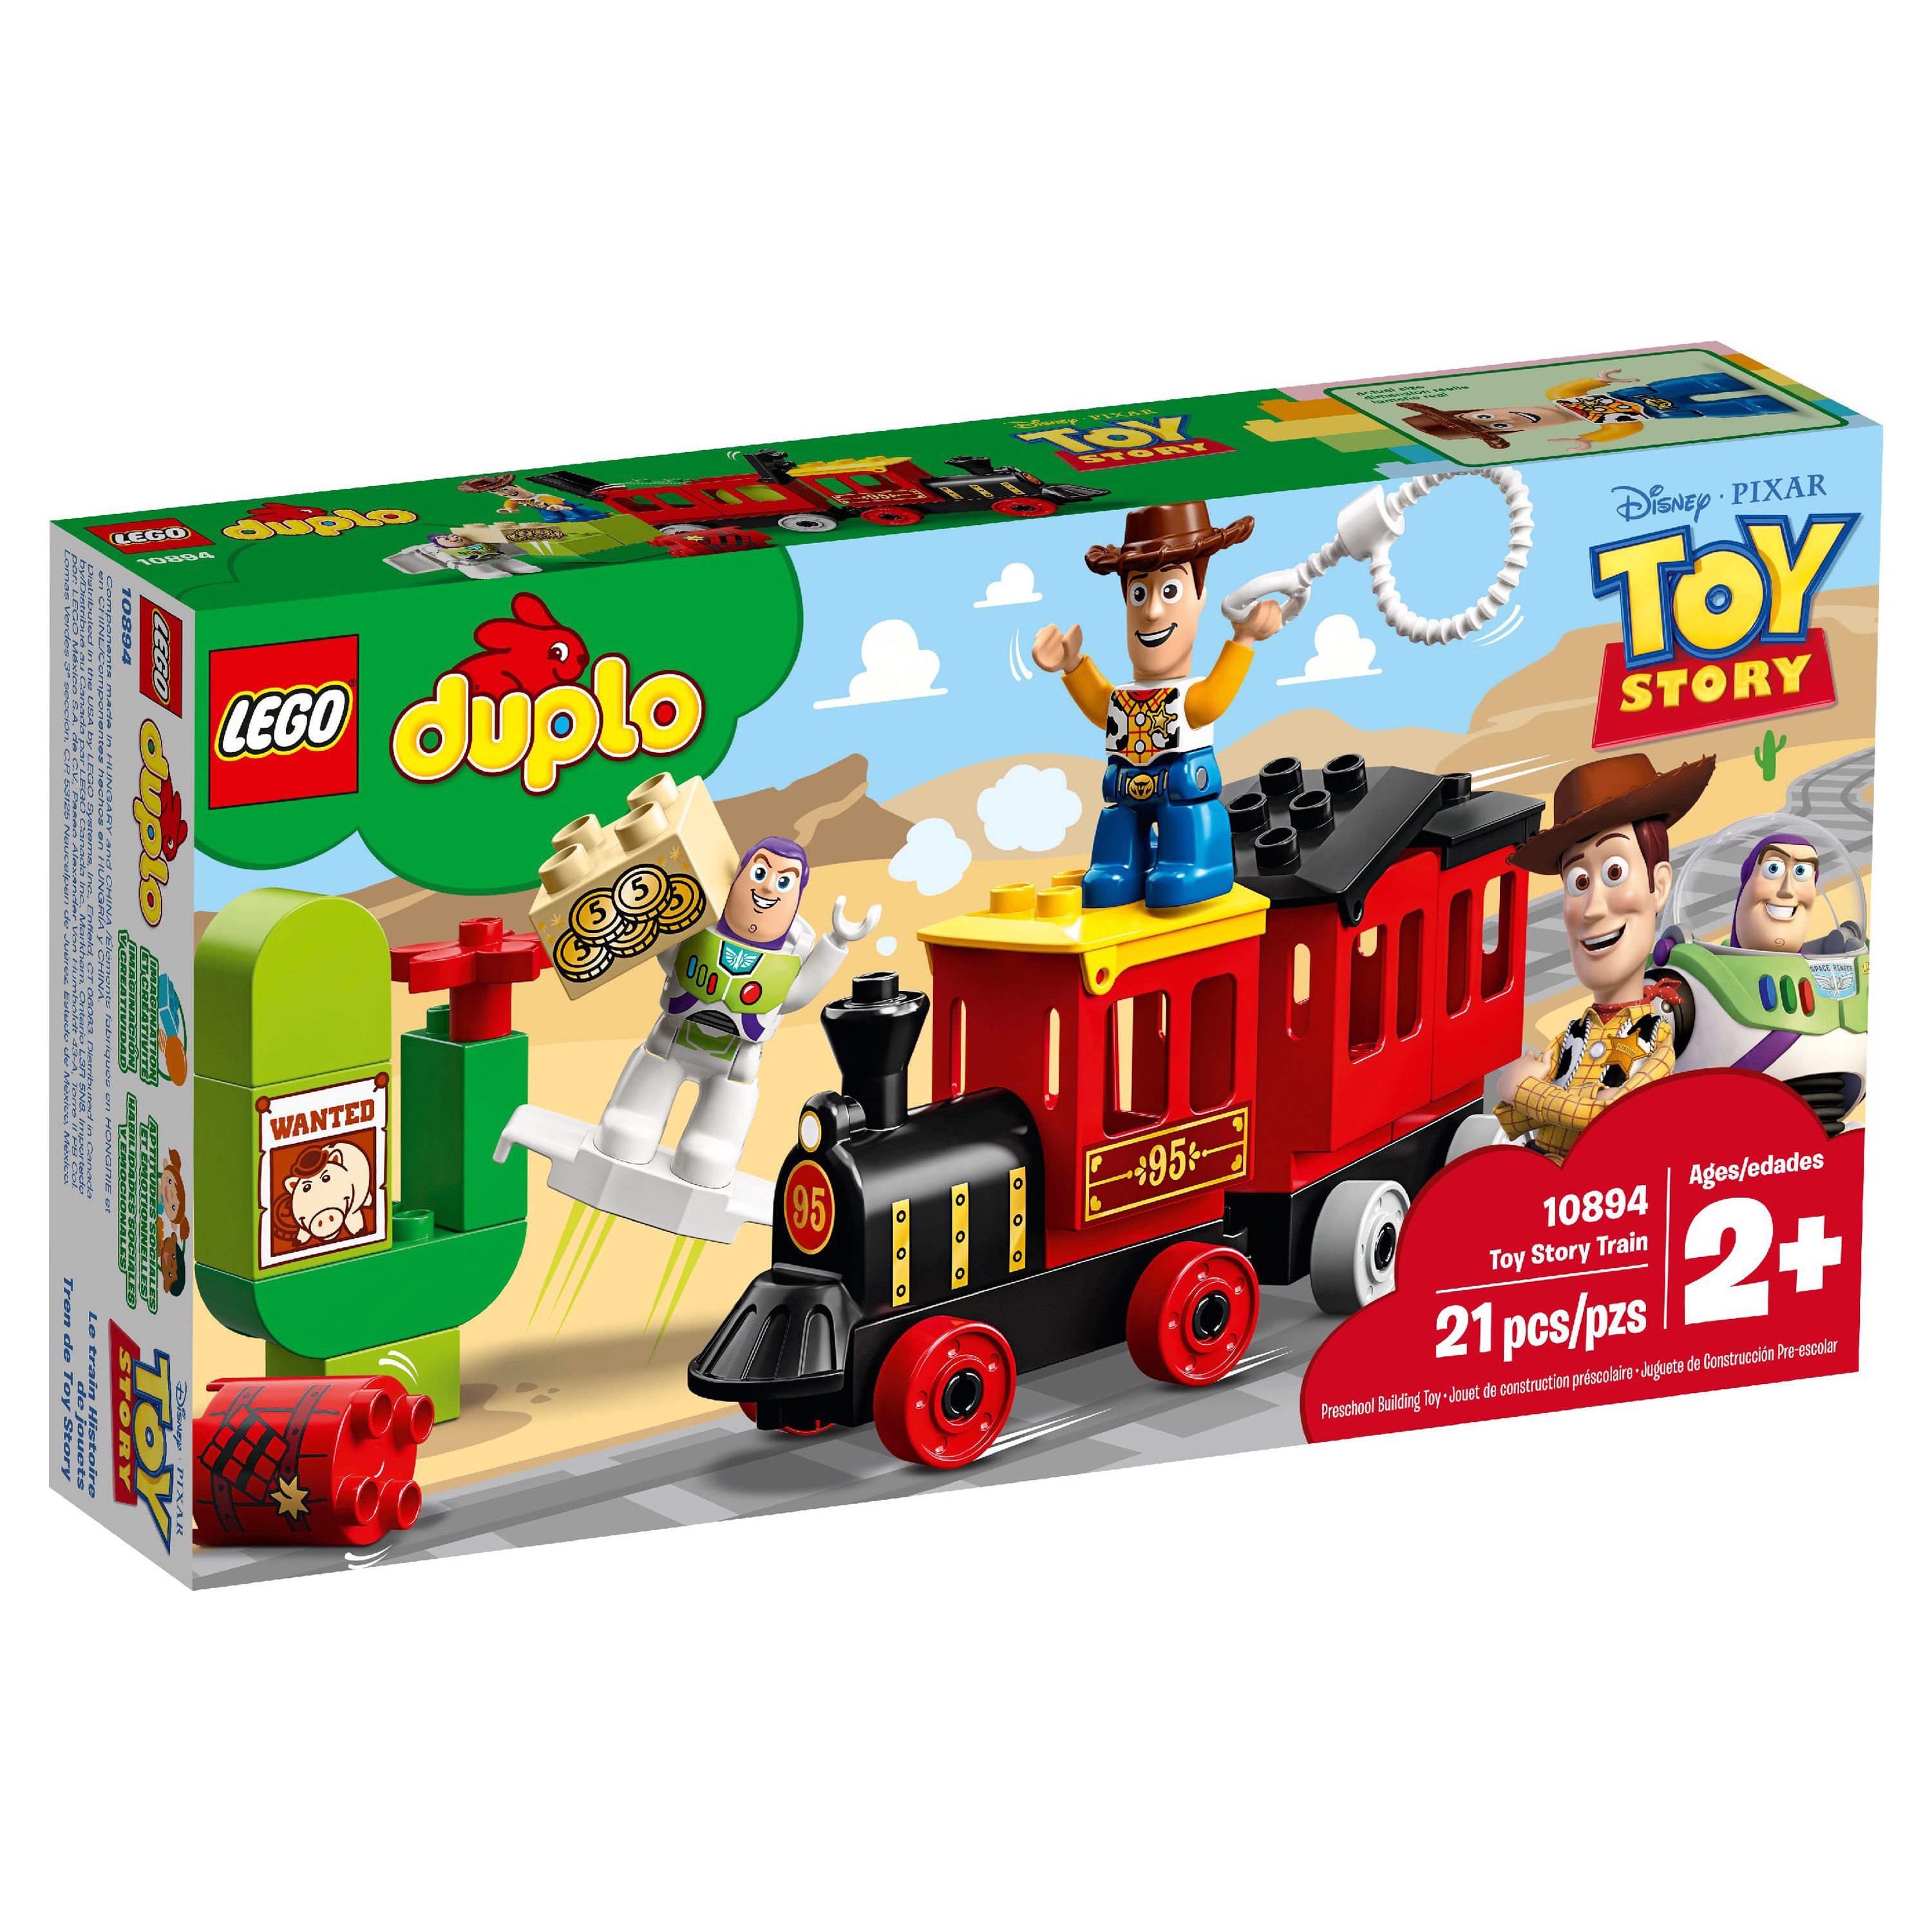 LEGO DUPLO Disney Pixar Toy Story Train 10894 Toddler Train Set - image 5 of 8